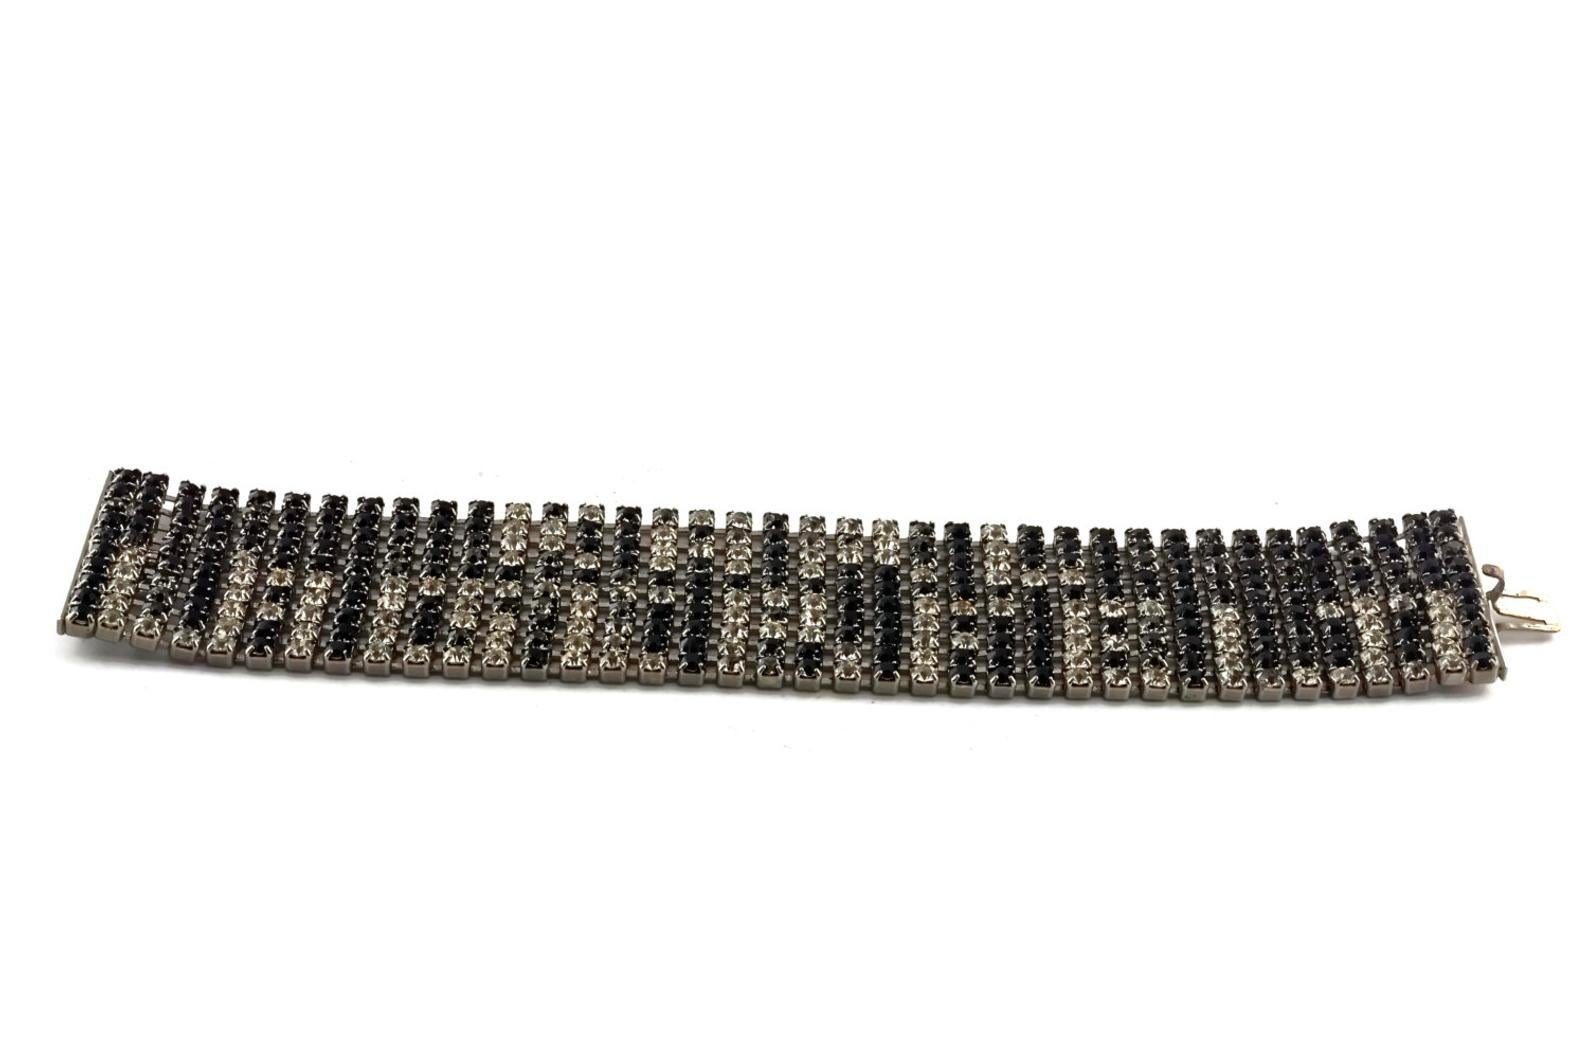 Vintage Runway KARL LAGERFELD Spelled Rhinestones Mesh Bracelet

Measurements:
Height: 1 4/8 inches
Wearable Length: 7 4/8 inches

Features:
- 100% Authentic KARL LAGERFELD.
- Spelled KARL LAGERFELD in black and clear mesh rhinestones.
- Silver